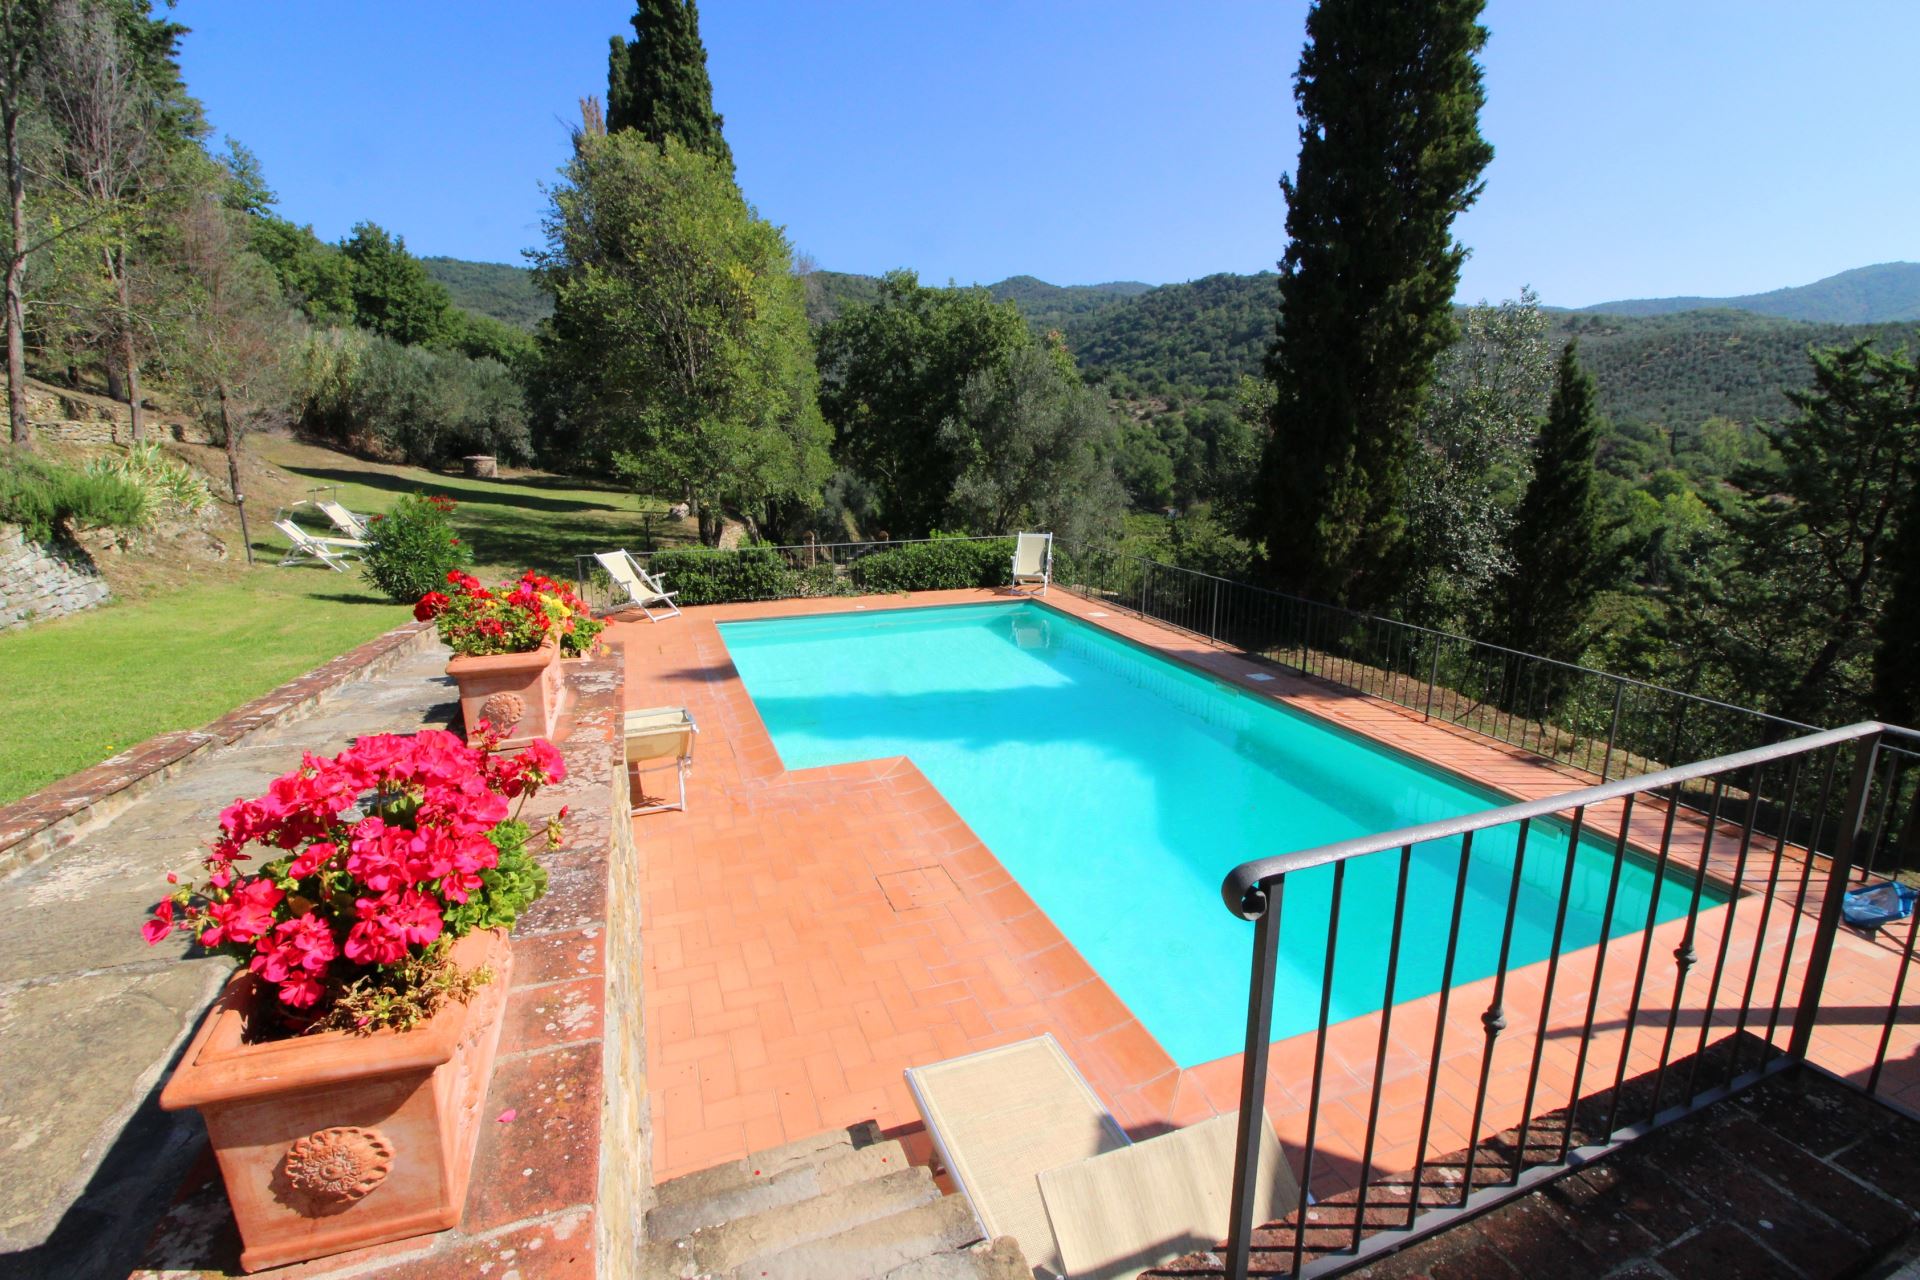 434_fcb3be7_Kindvriendelijk vakantiehuis met privé zwembad, Borgo Caprile, Toscane, Cortona, Arezzo, (41).